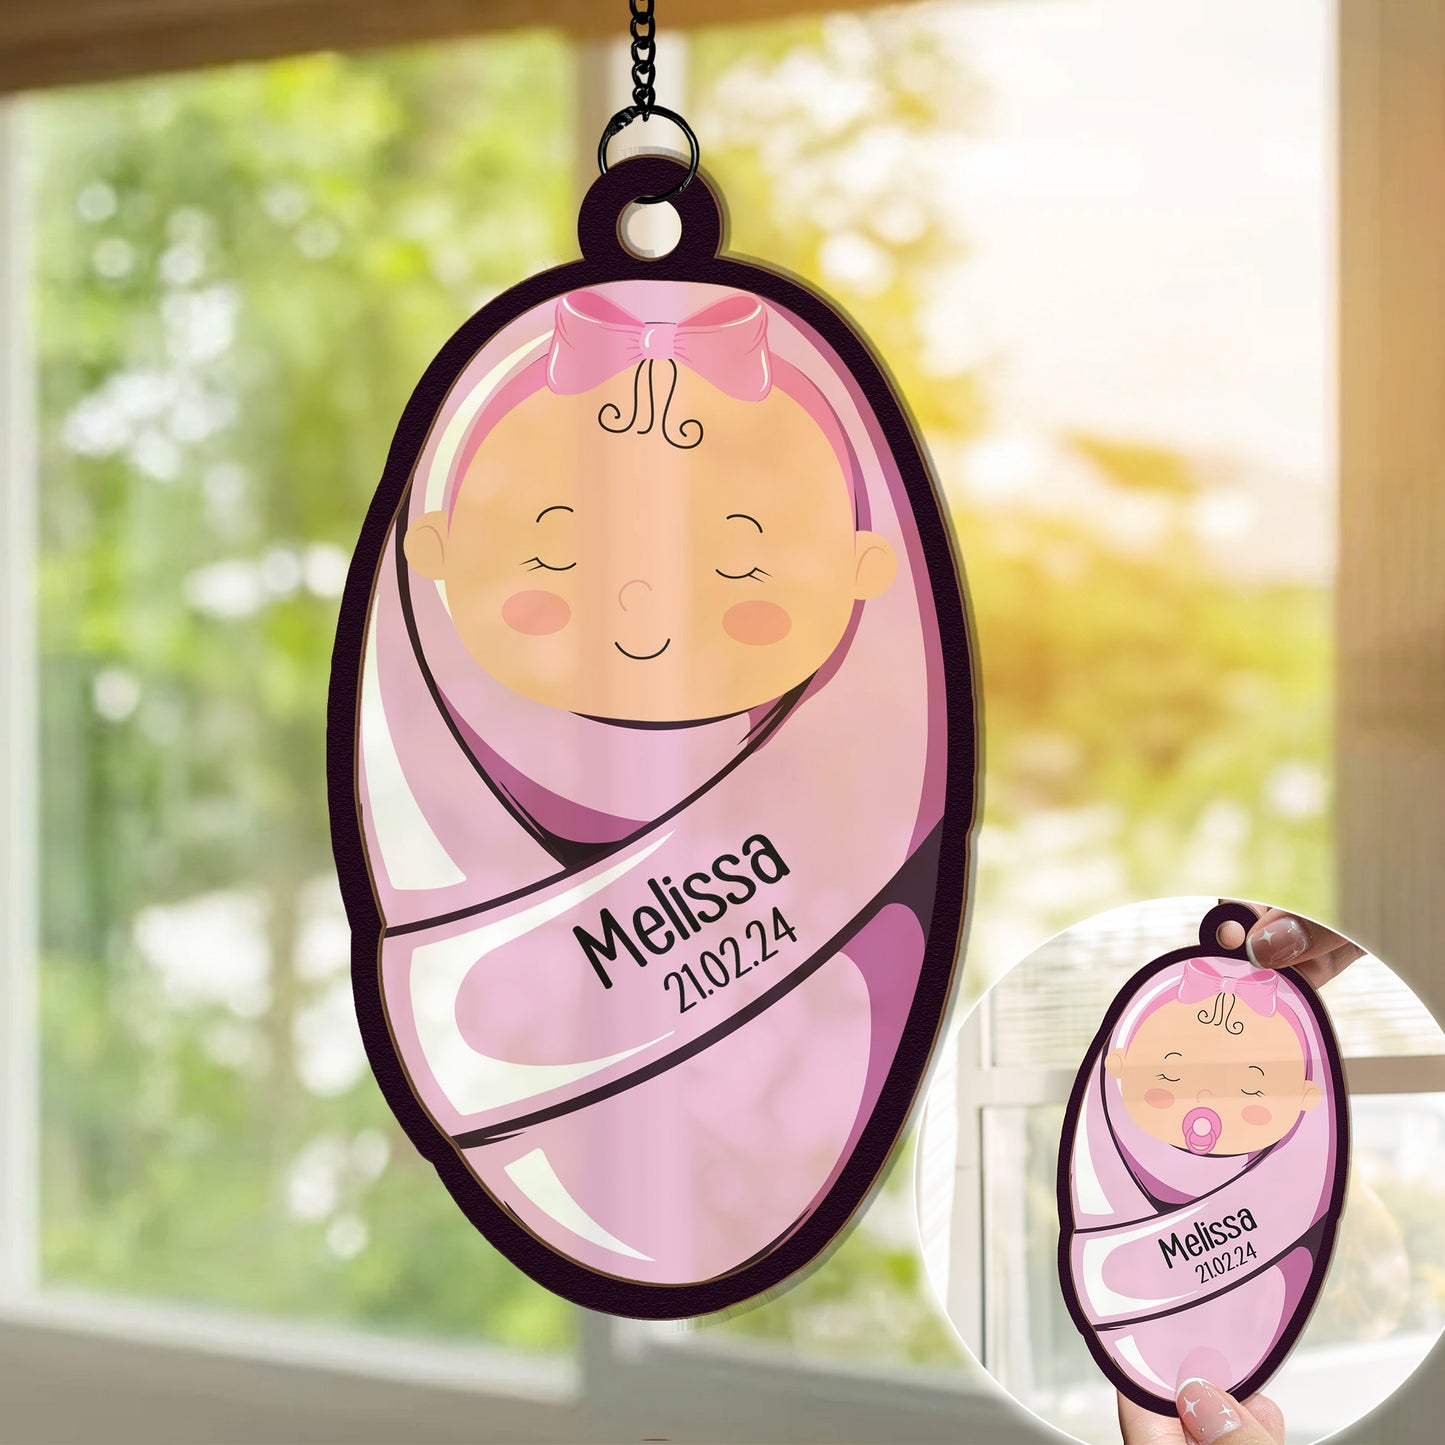 Baby Swaddle - Personalized Window Hanging Suncatcher Ornament